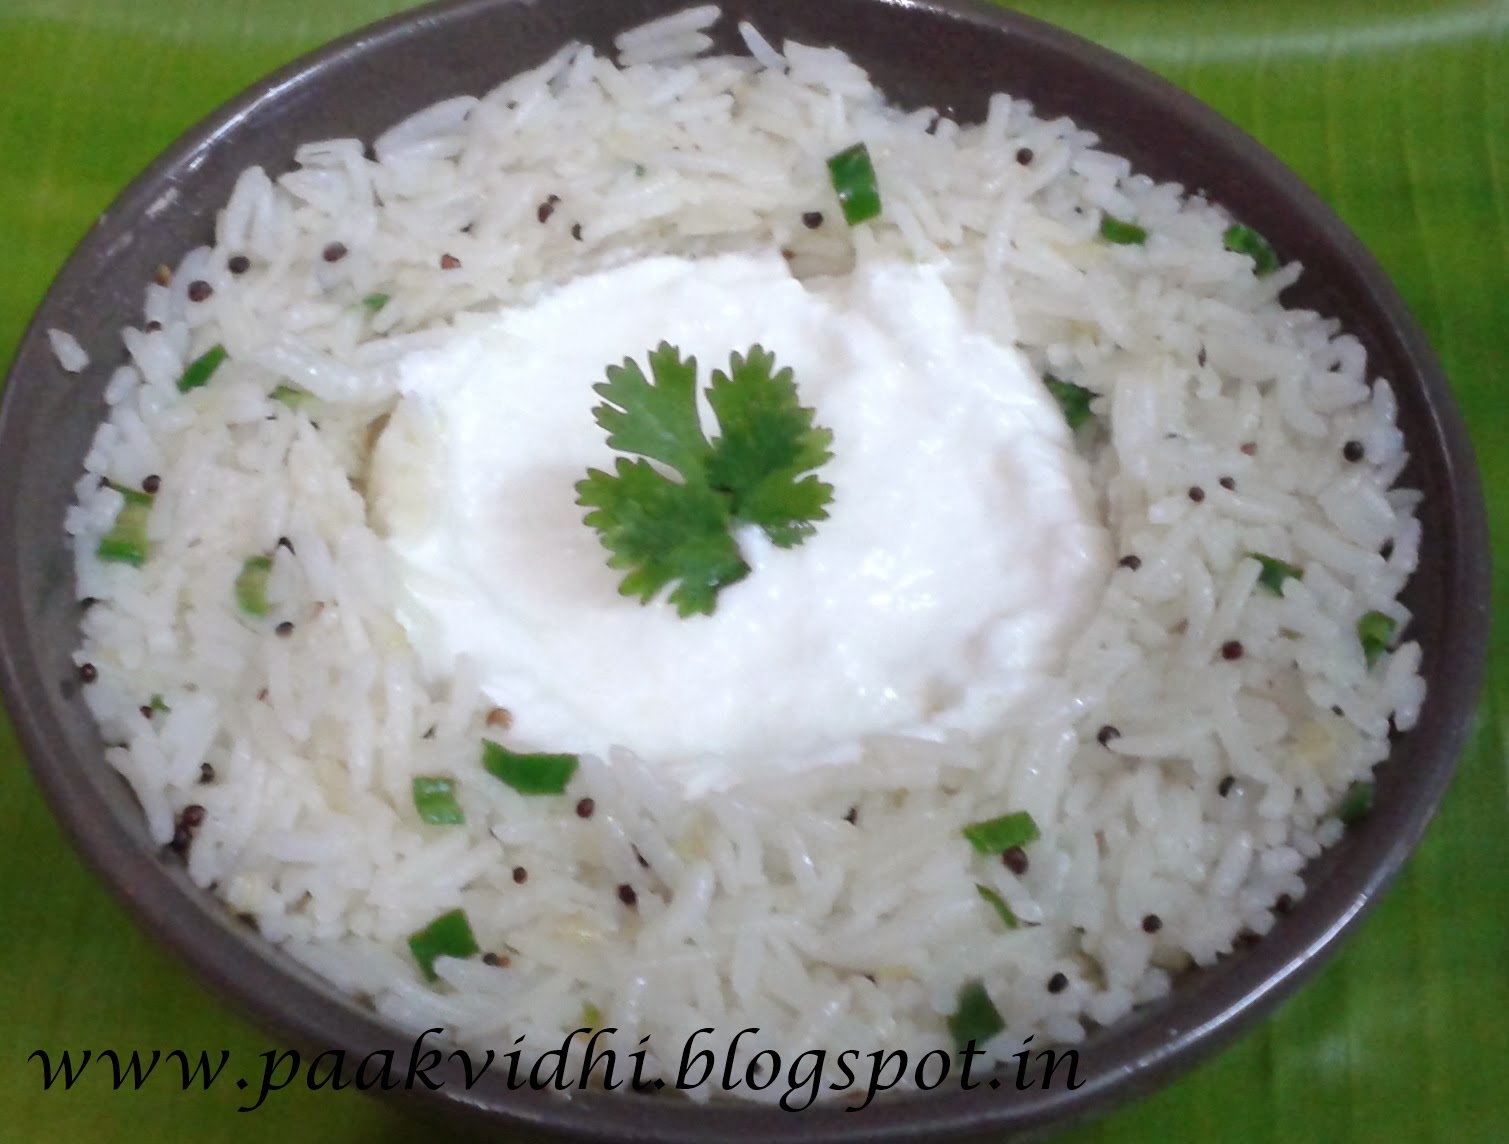 http://paakvidhi.blogspot.in/2014/01/curd-rice.html